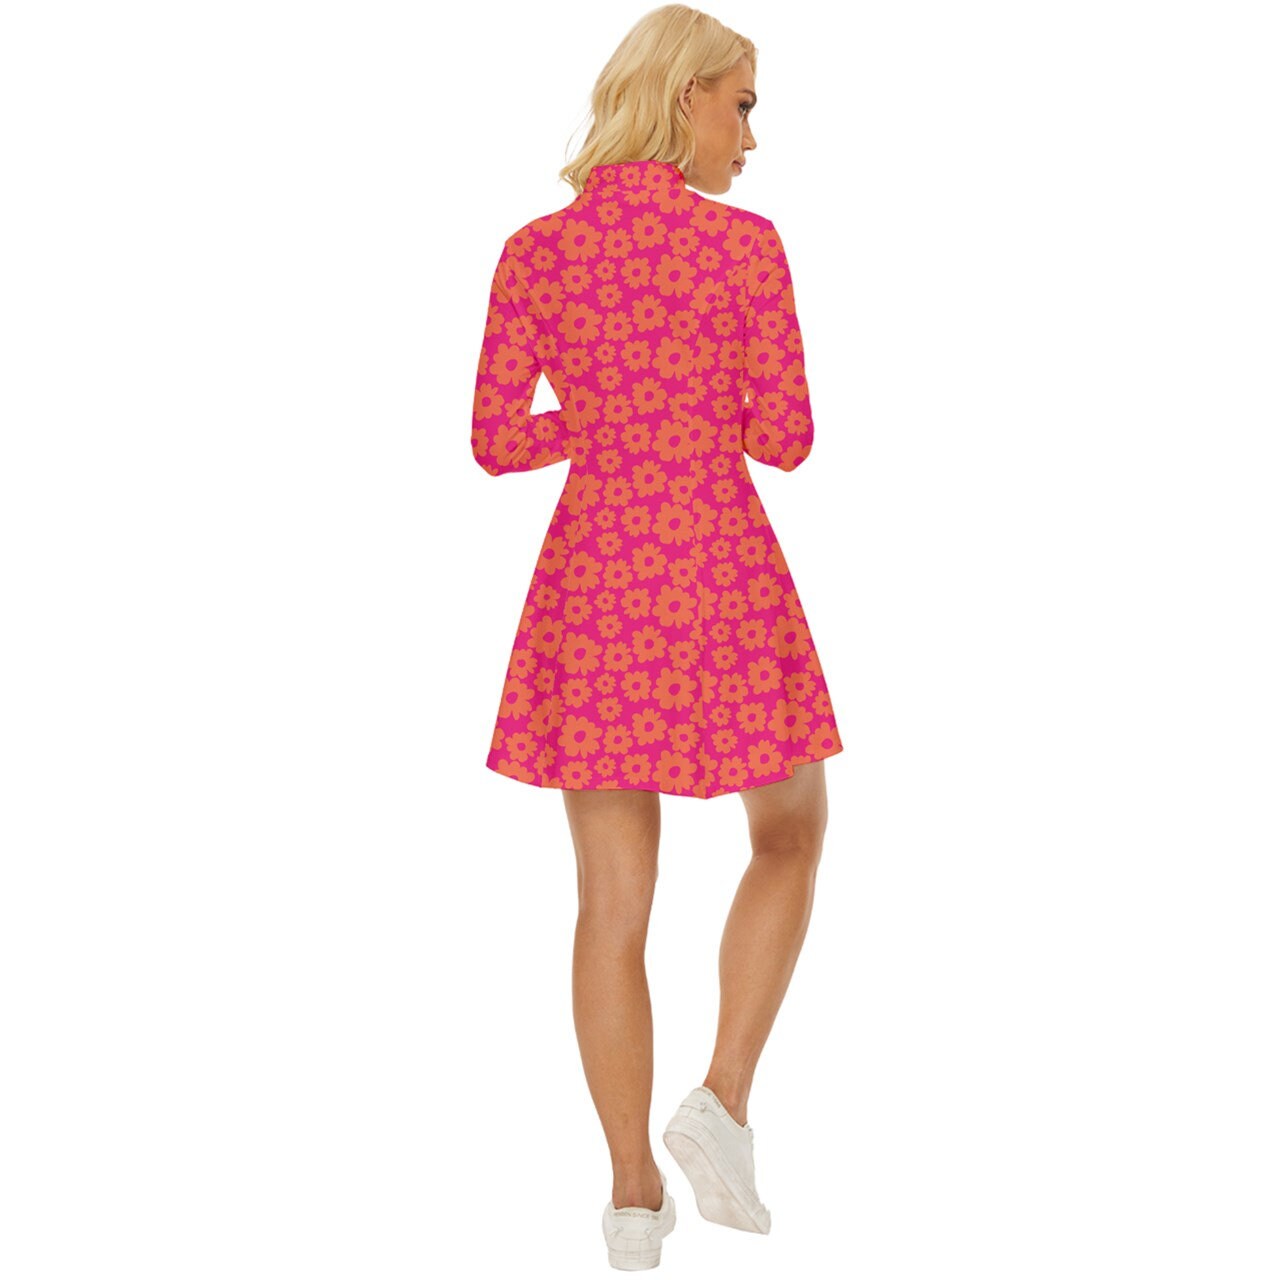 60er-Kleiderstil, Mod-Kleid, rosa Mod-Kleid, Rollkragenkleid, GOGO-Kleid, Kleid im 60er-Jahre-Stil, 60er-Minikleid, Blumenkleid, Retro-Kleid